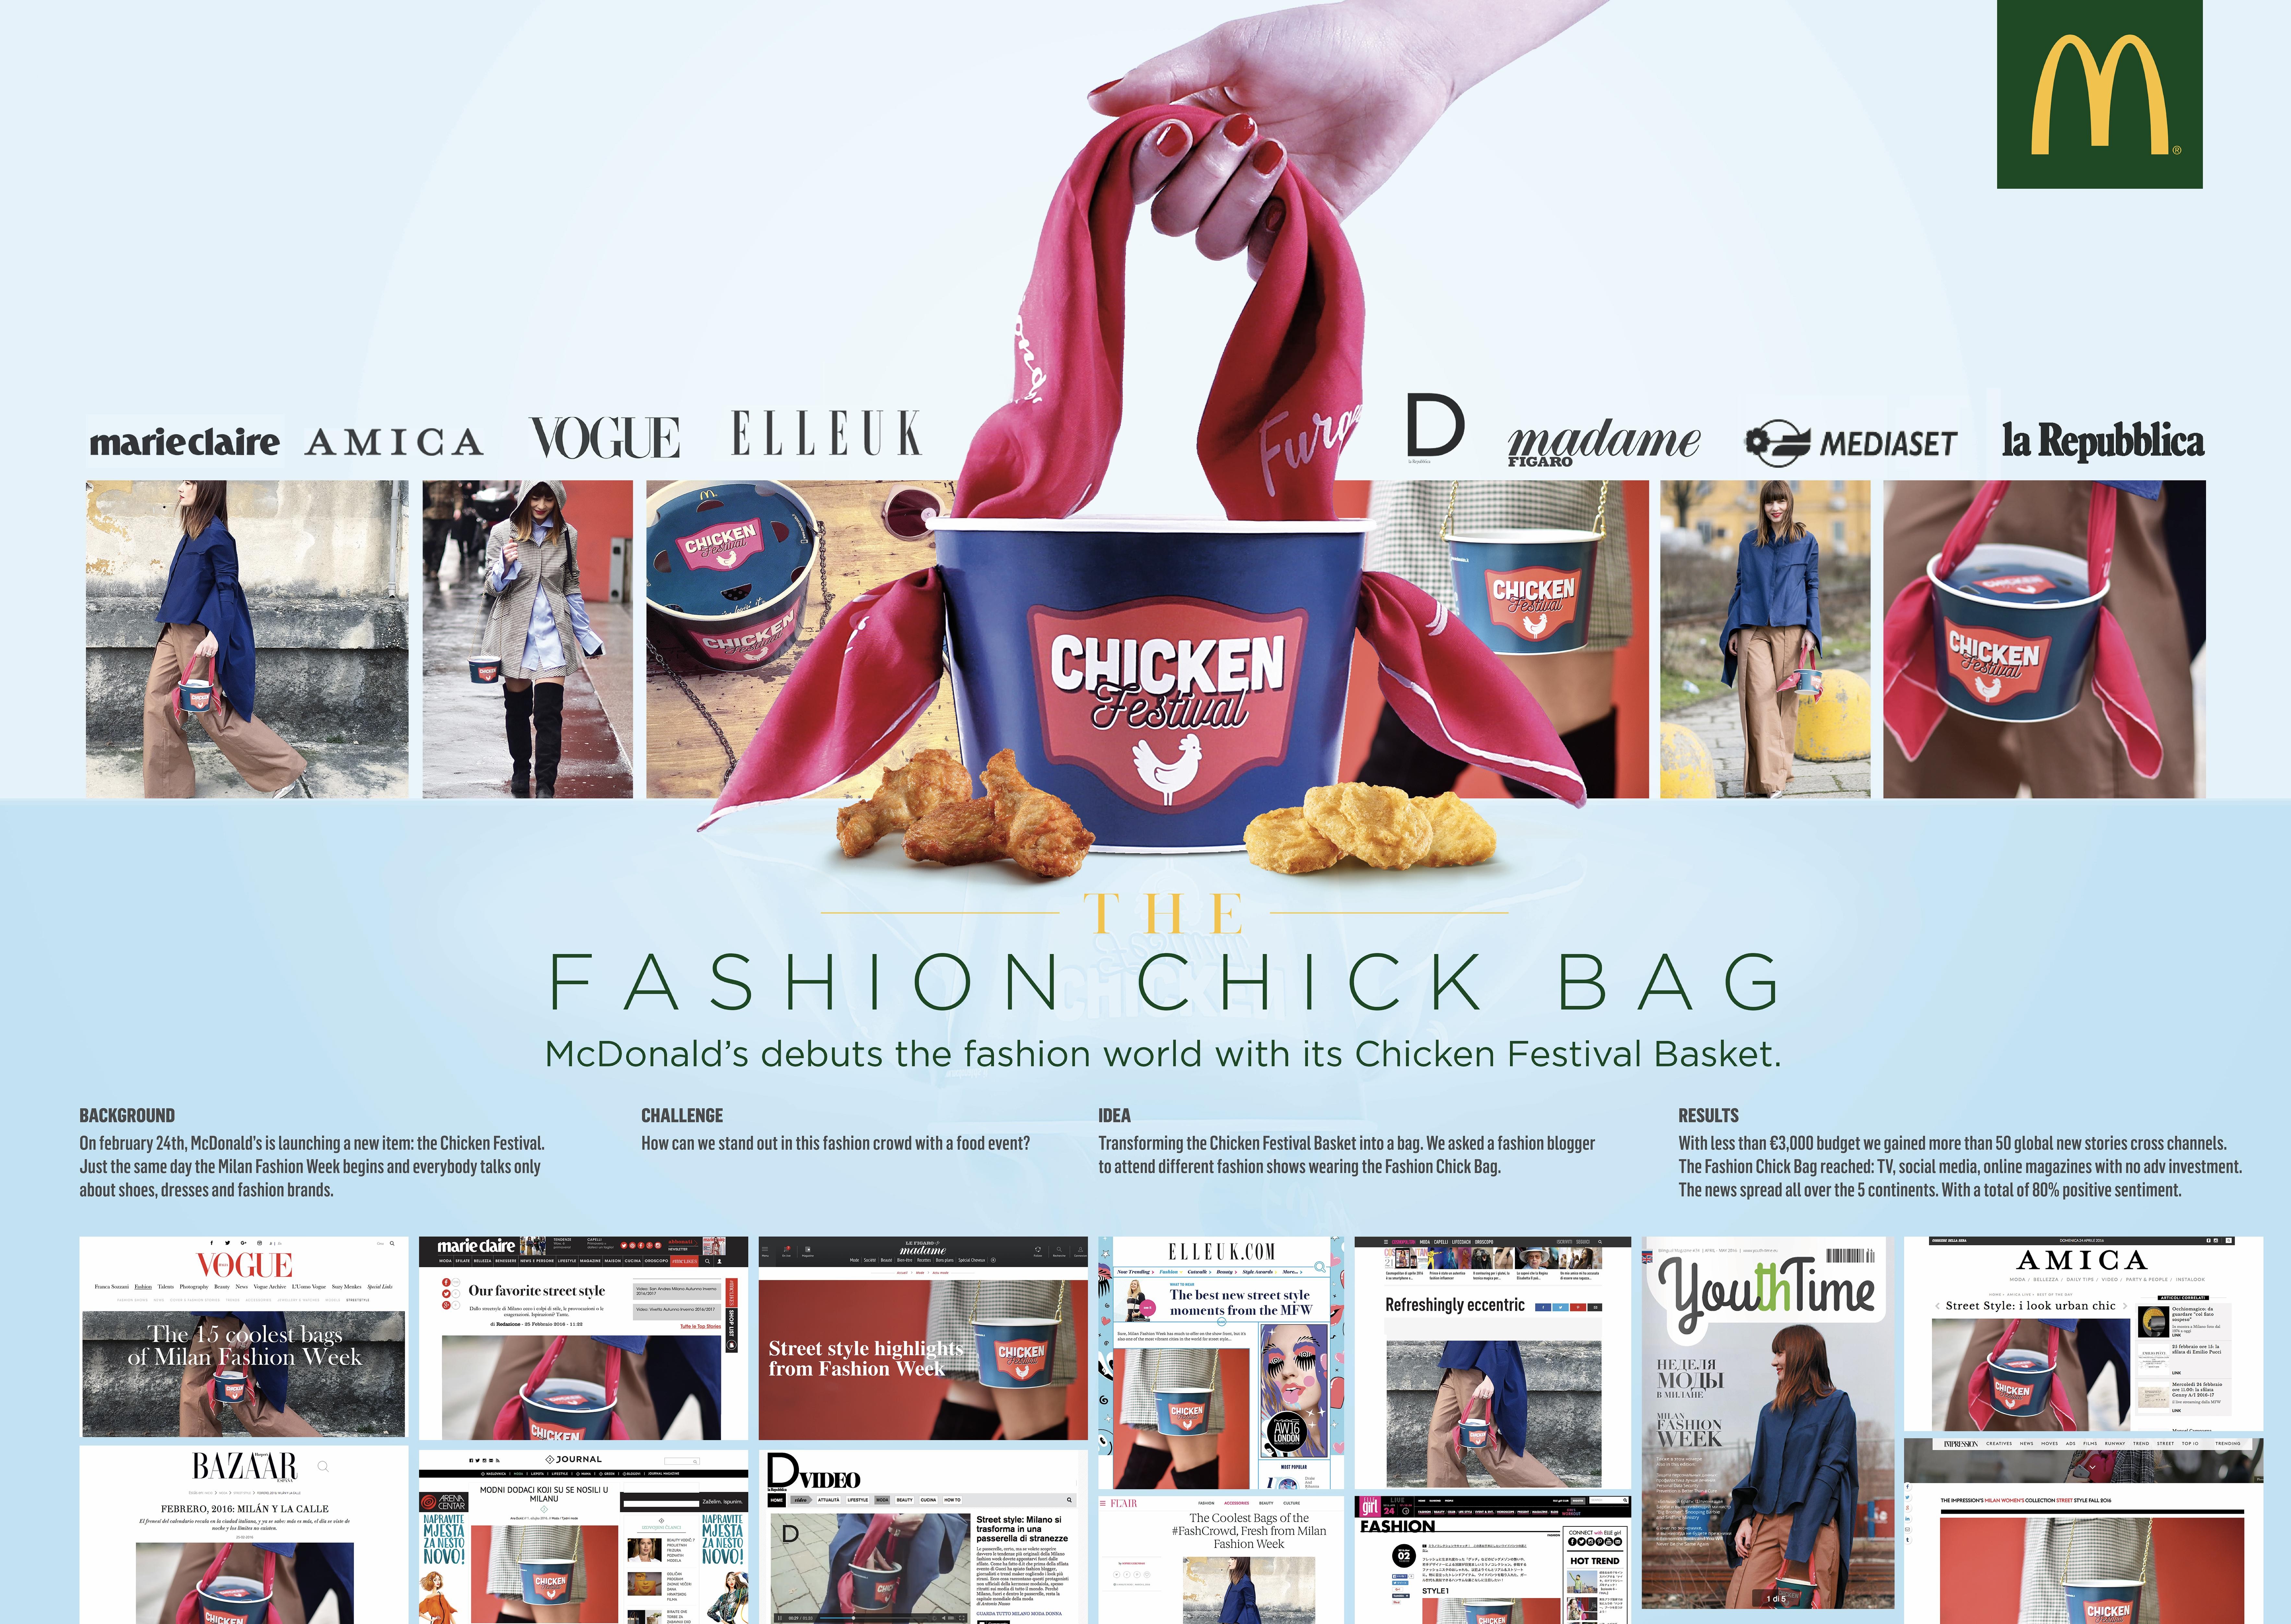 McDonald's The Fashion Chick Bag